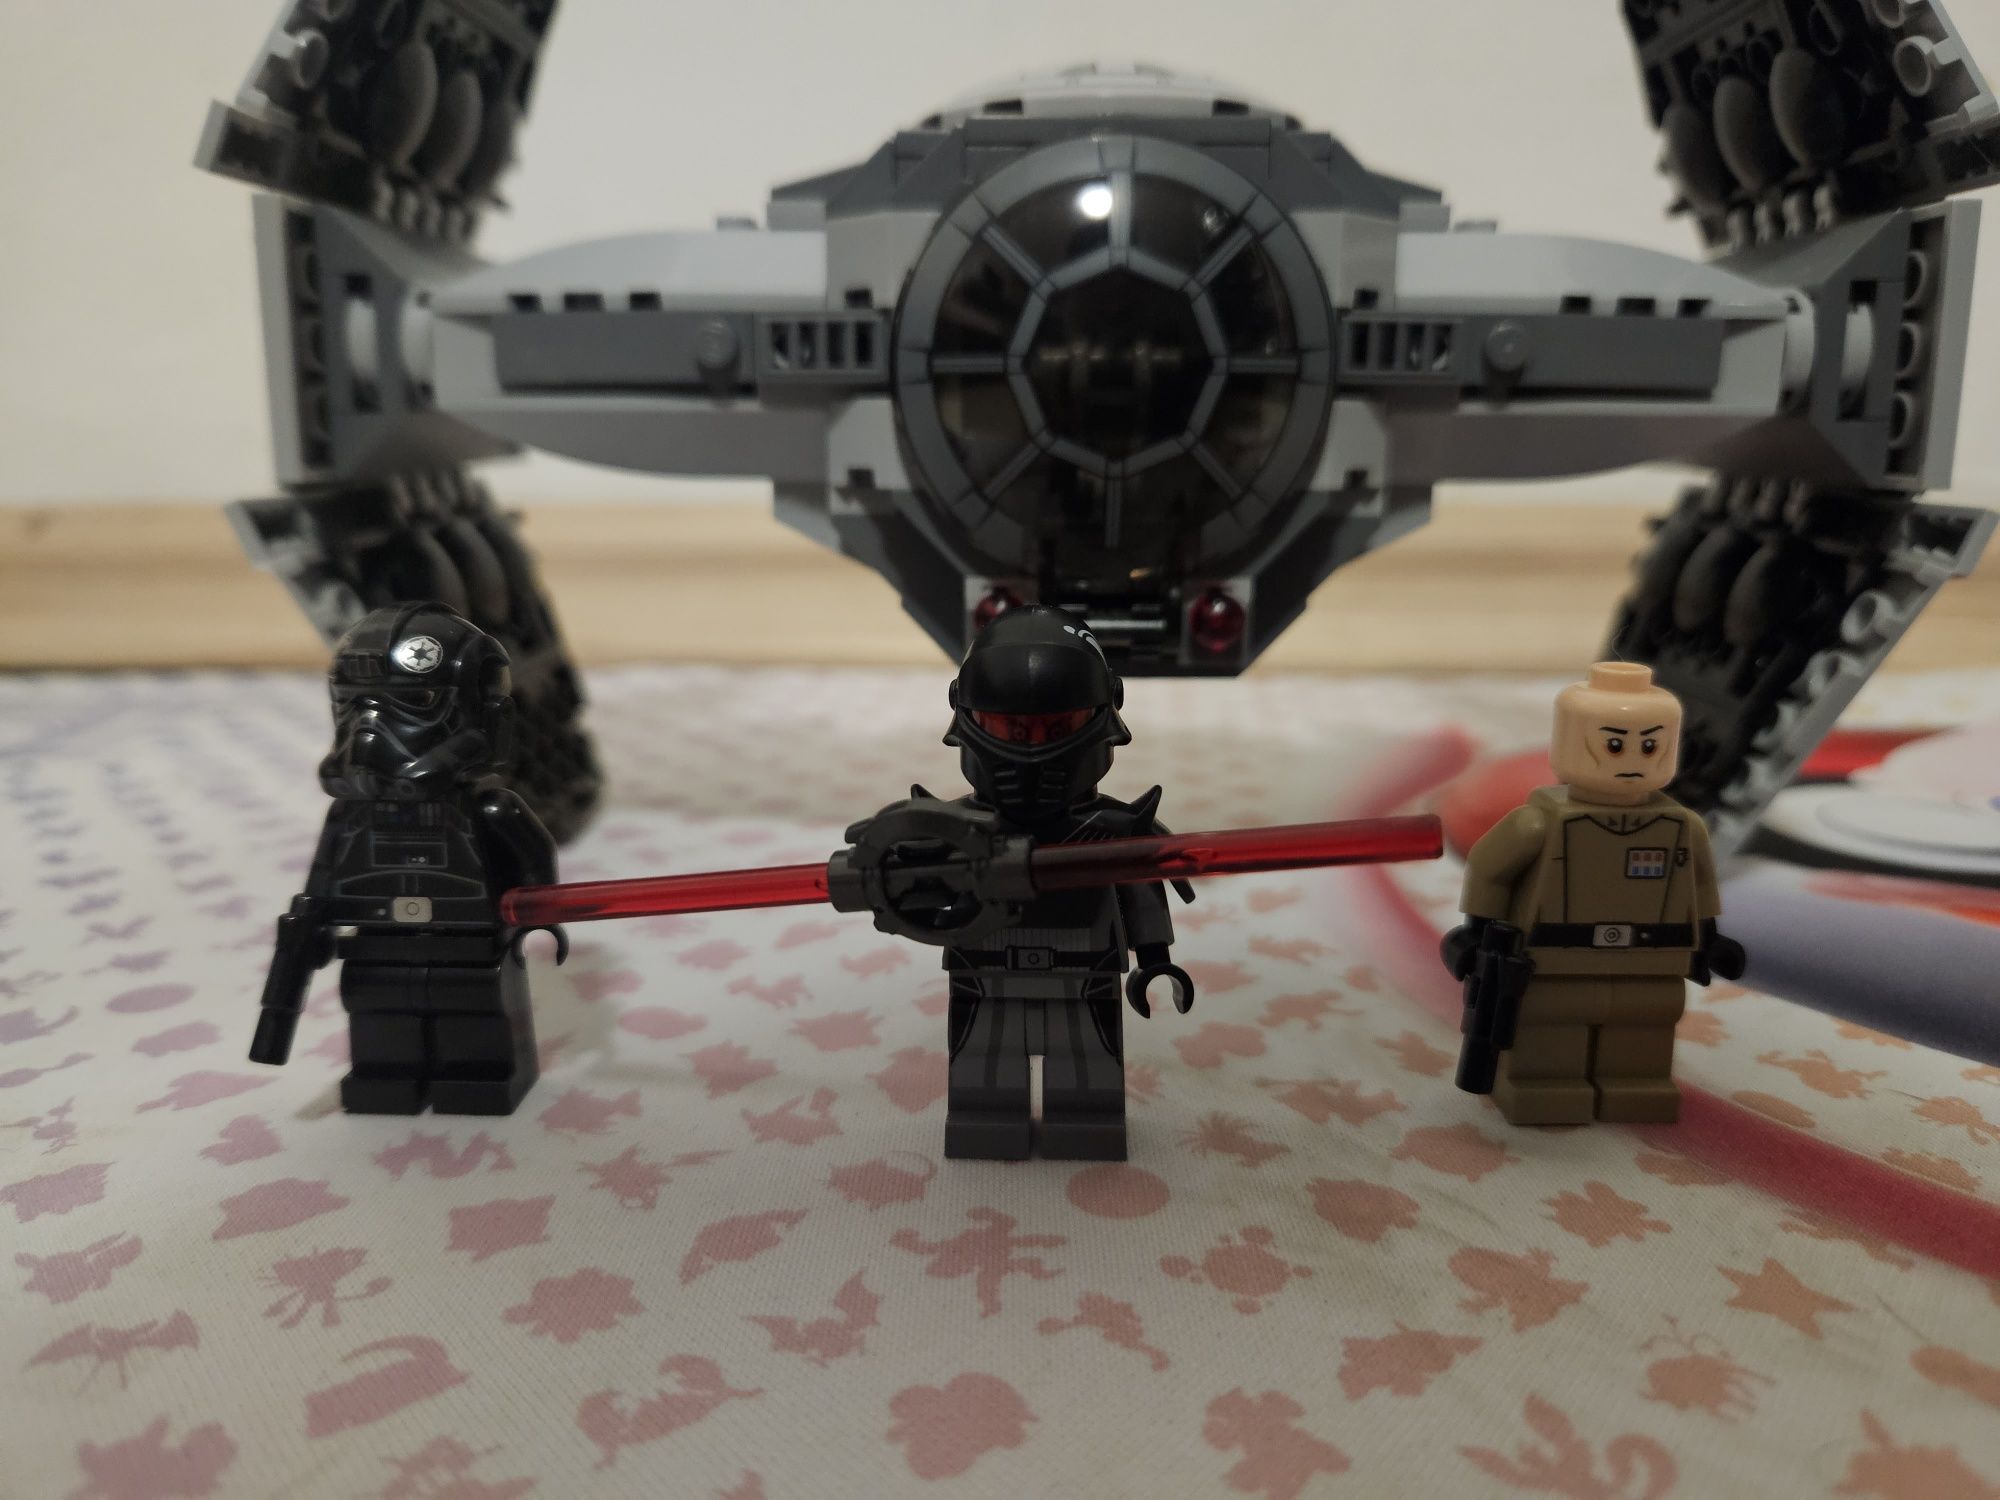 Lego Star Wars Tie Advanced Prototype